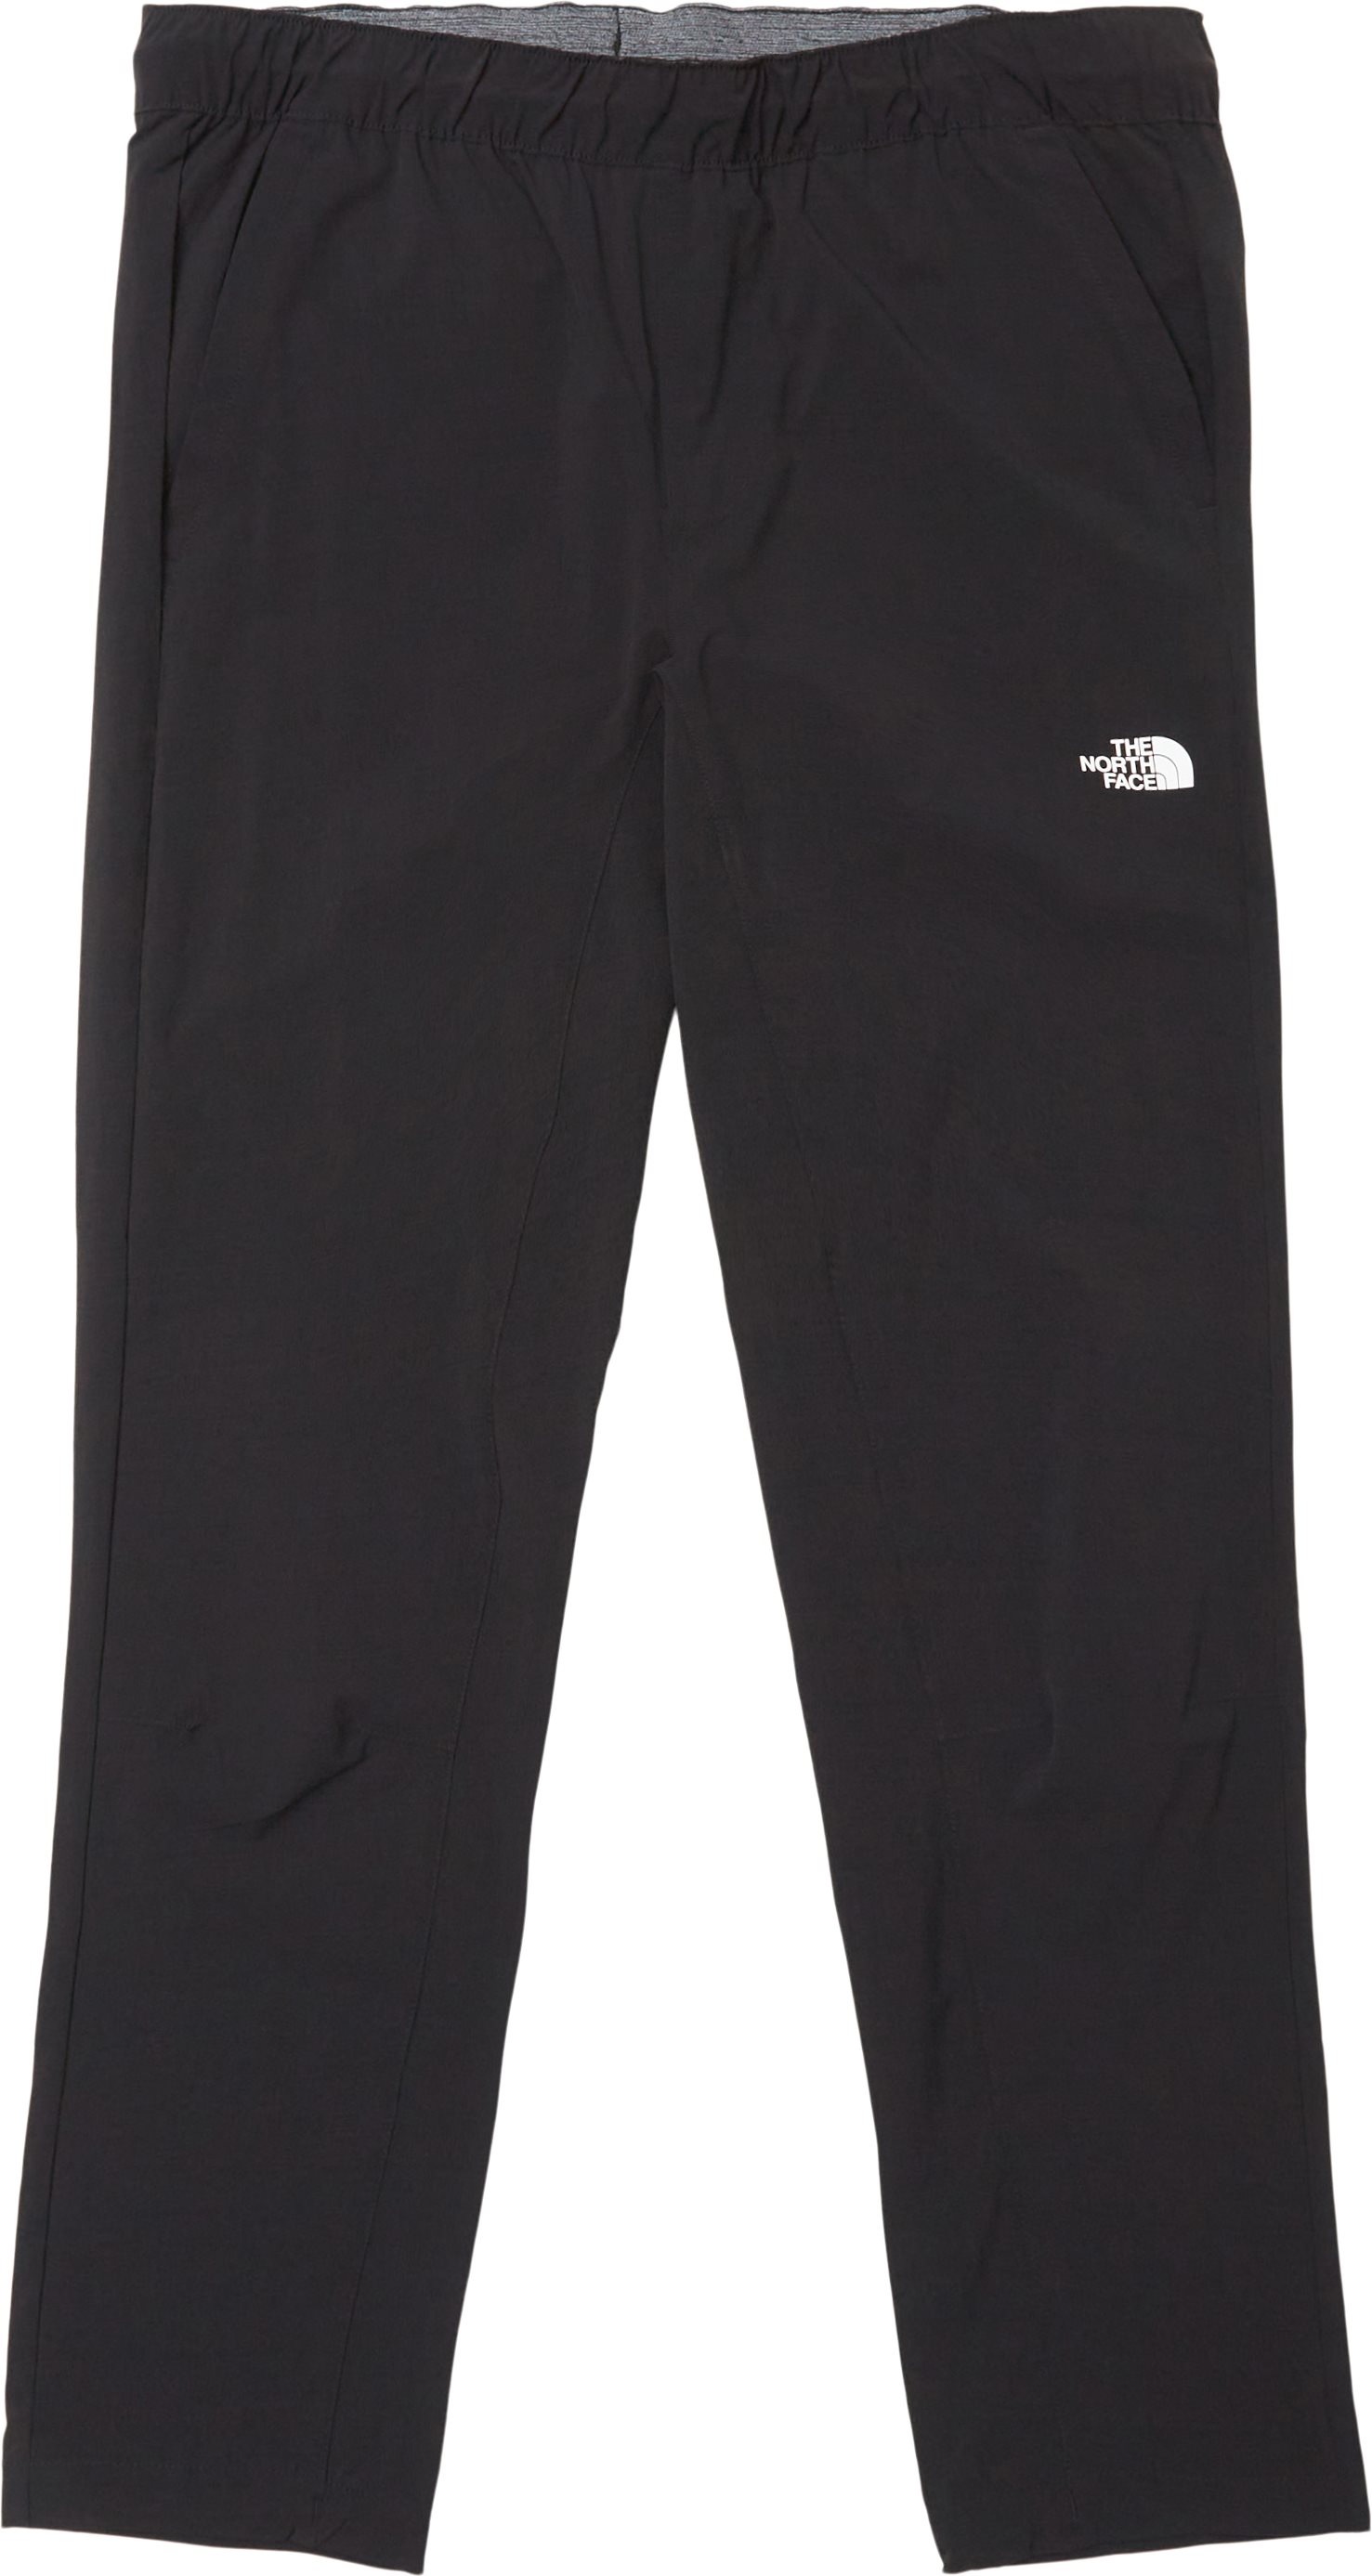 Tech Woven Bukser - Trousers - Regular fit - Black